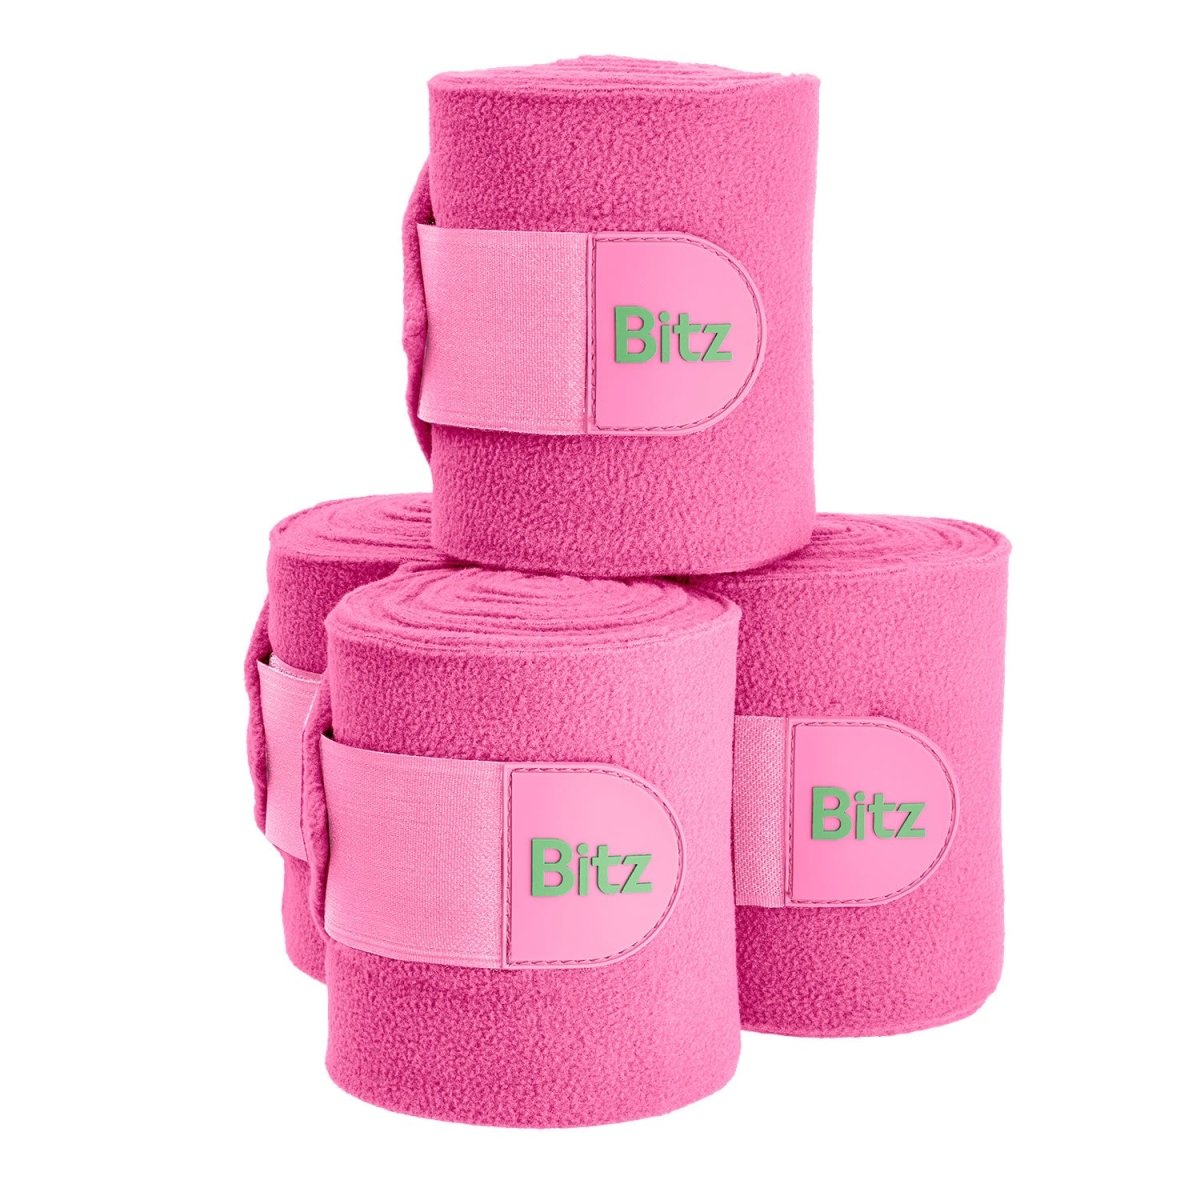 Bitz Bandages Fleece - Pink - 4 Pack